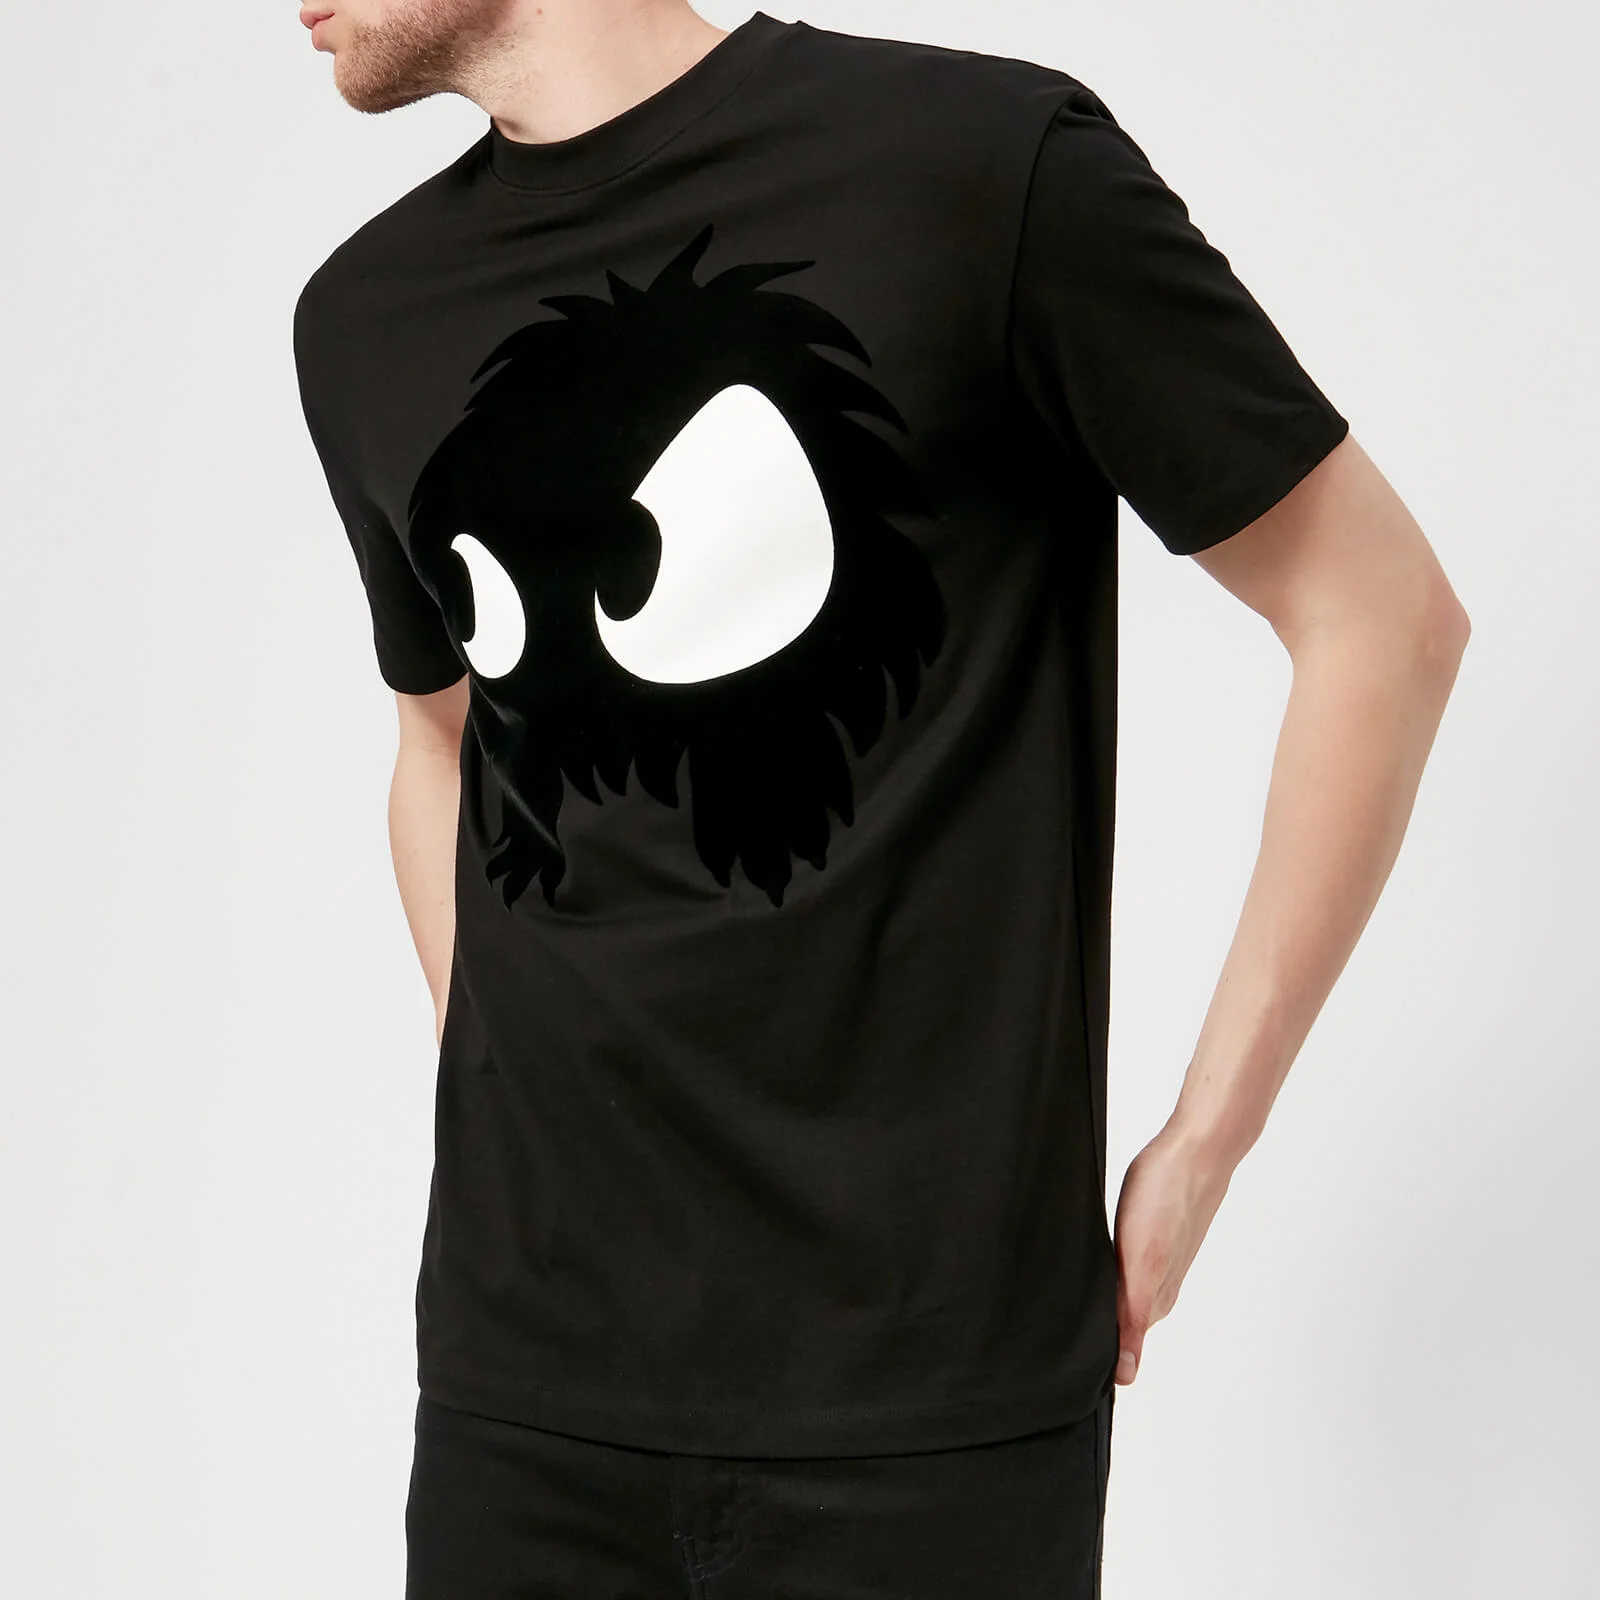 McQ Alexander McQueen Men's Dropped Shoulder Chester Monster T-Shirt - Darkest Black Image 1